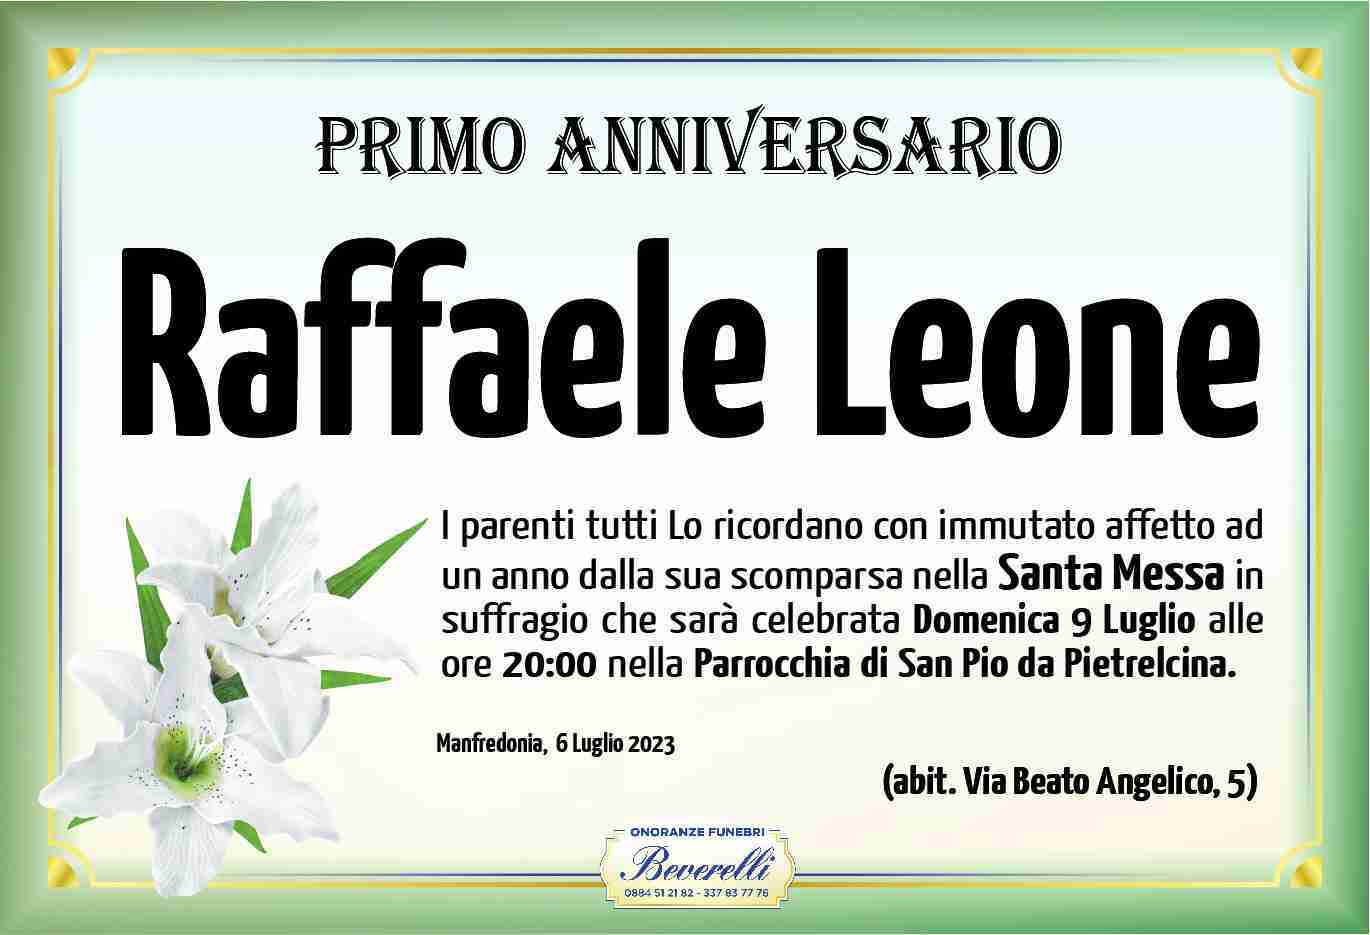 Raffaele Leone